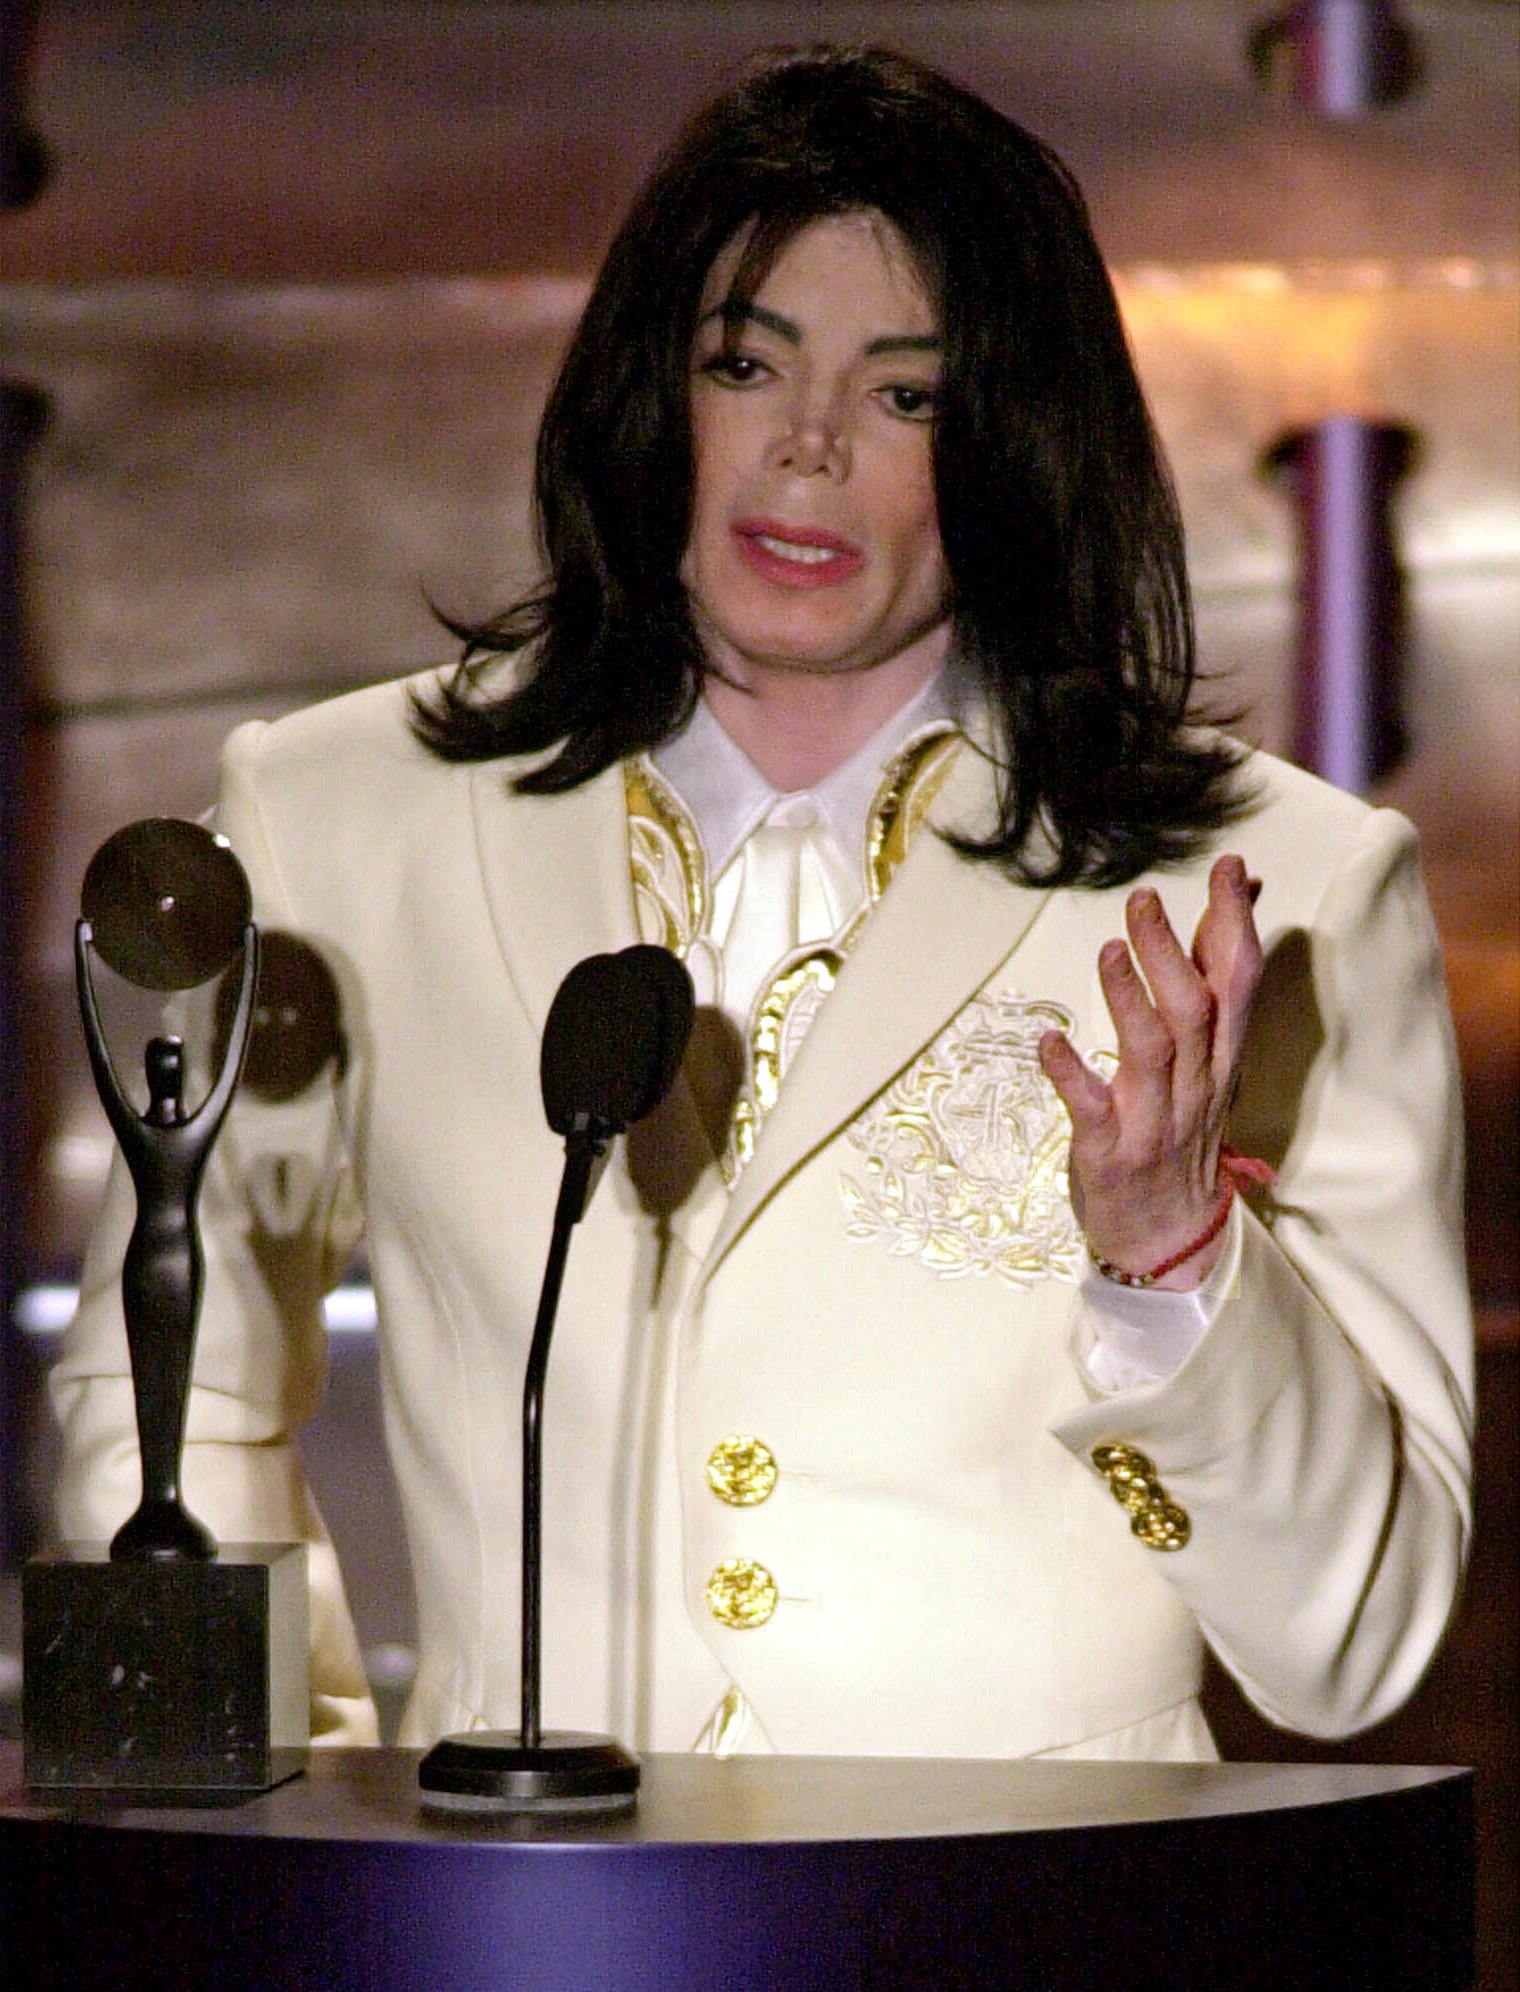 Michael Jackson, trayectoria musical, imágenes, vida